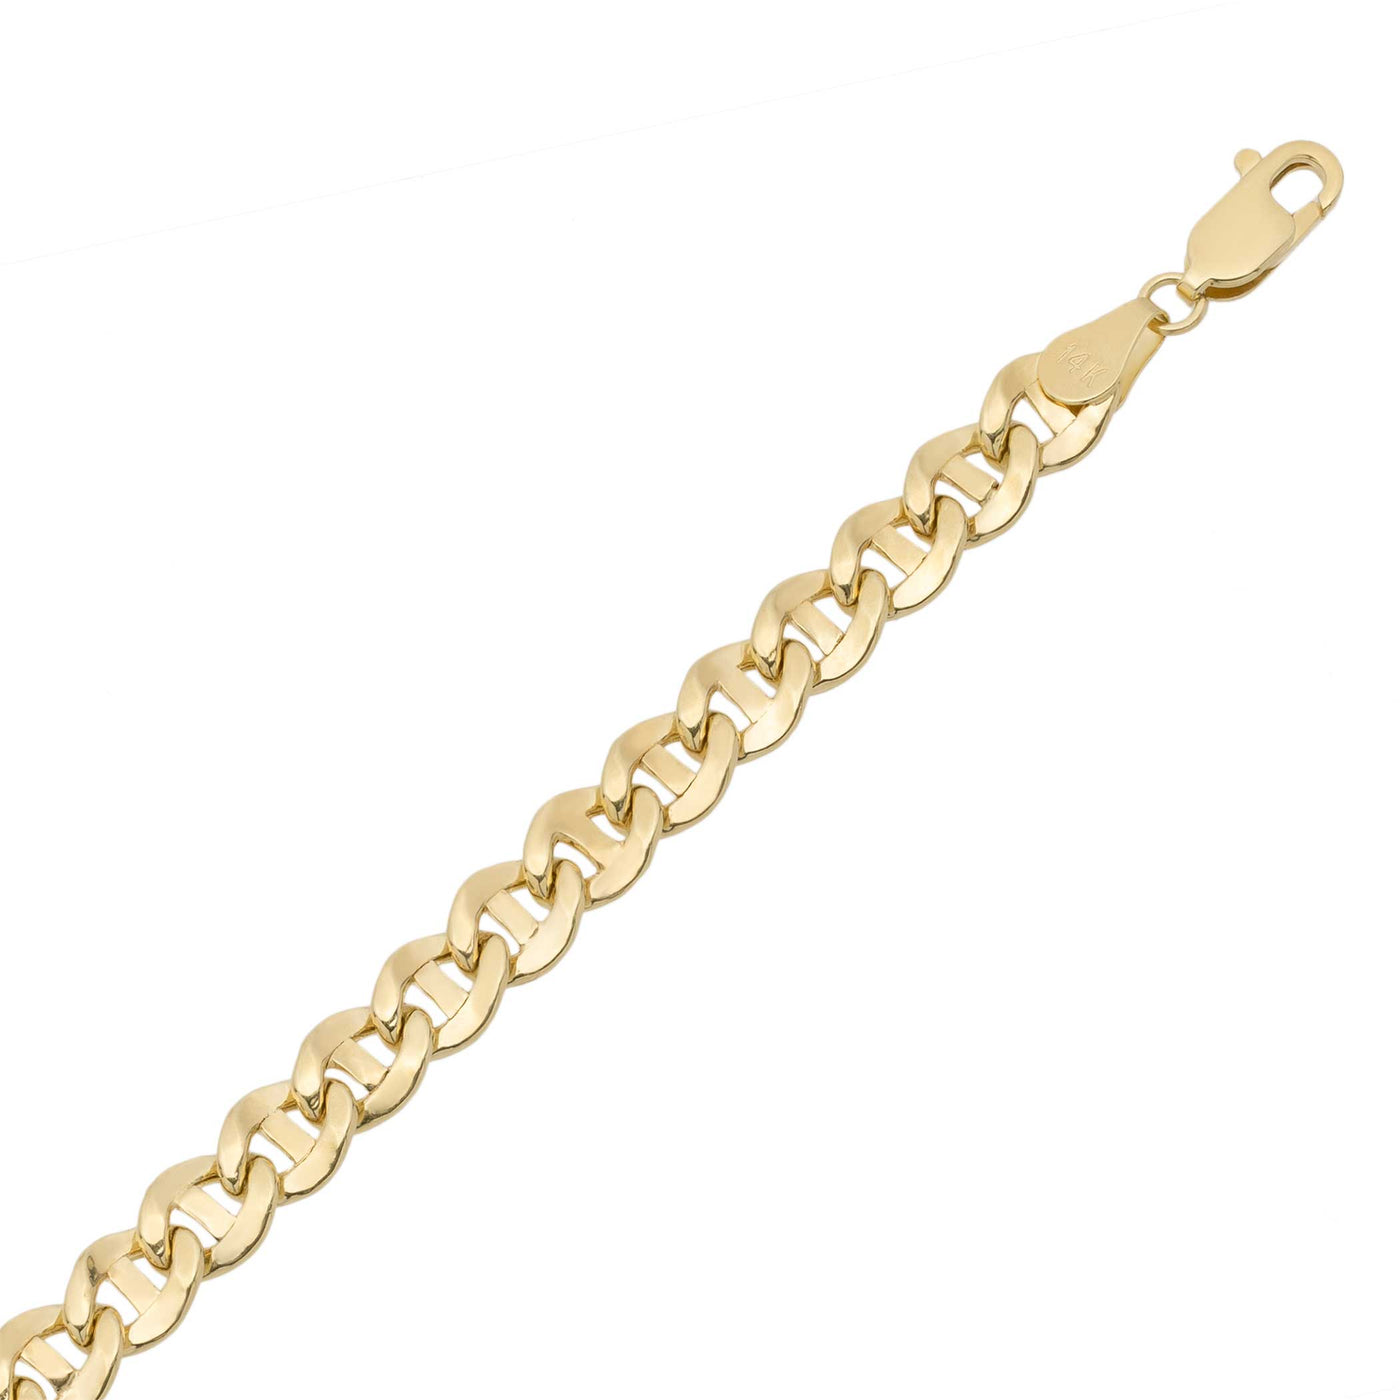 Mariner Link Bracelet 14K Yellow Gold - Hollow